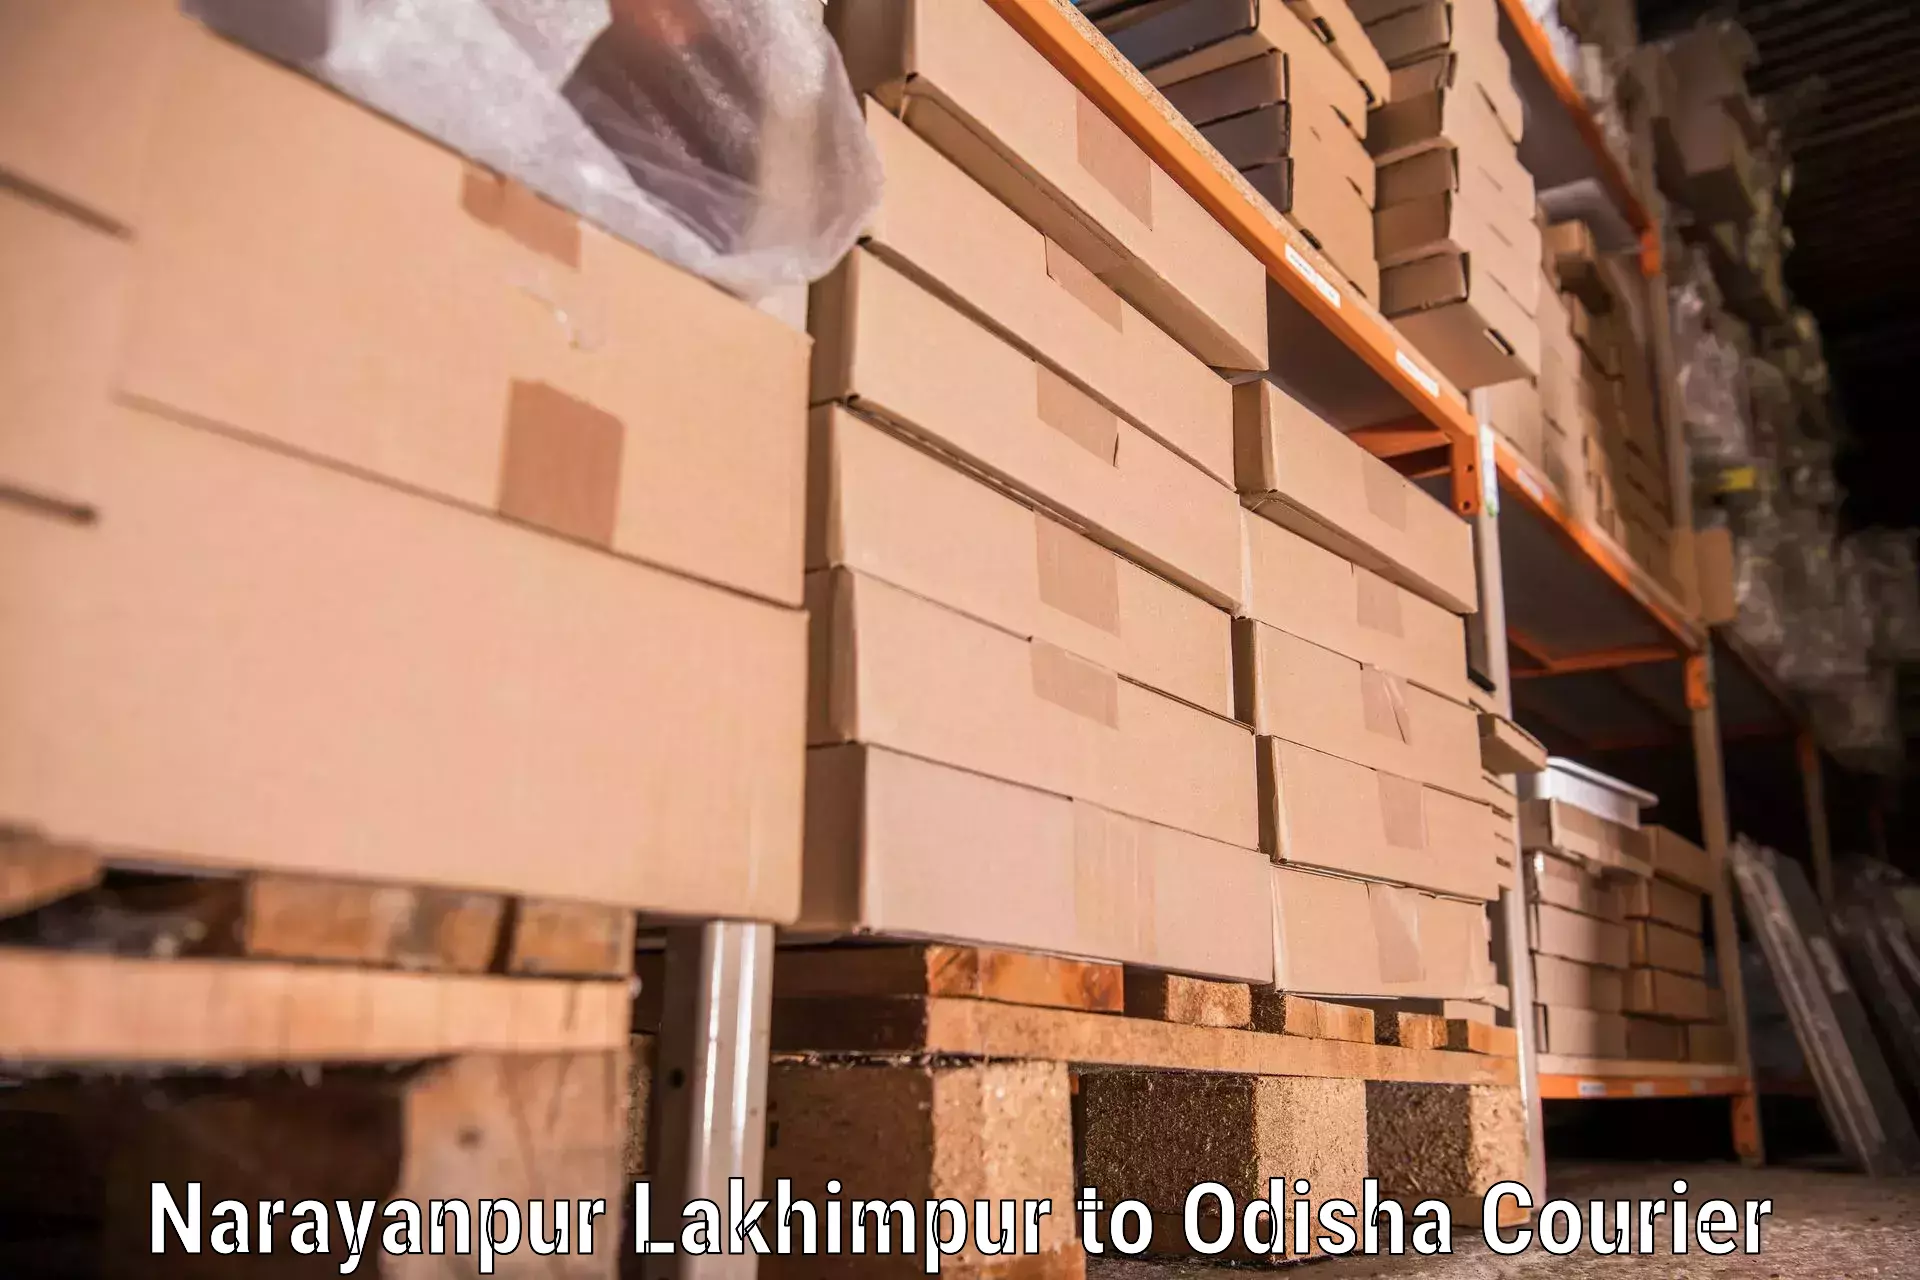 Professional packing services in Narayanpur Lakhimpur to Saintala